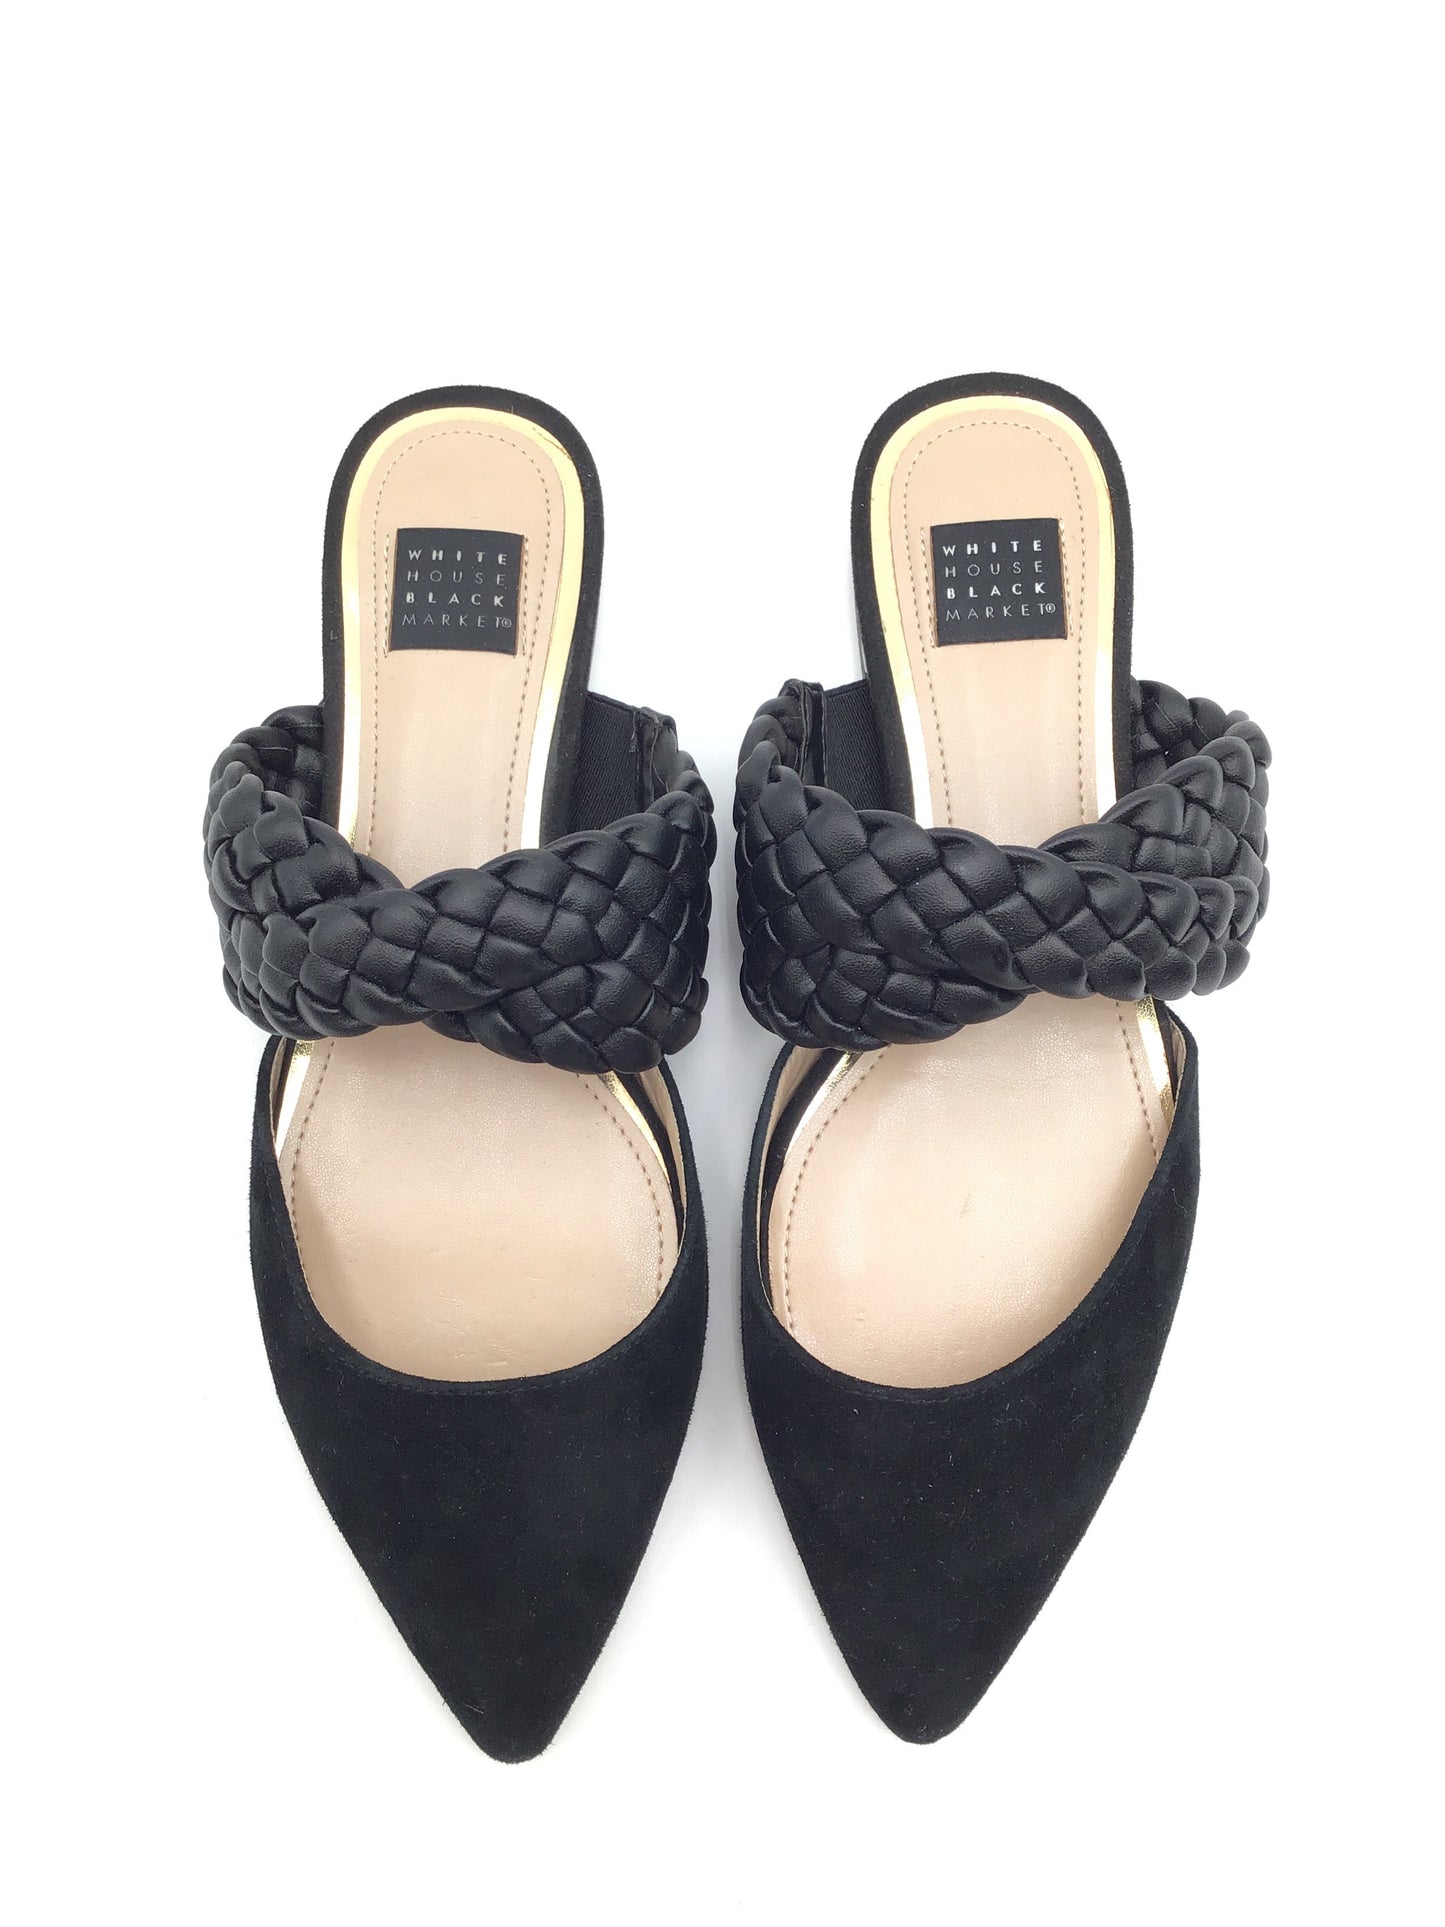 Shoes Flats Mule & Slide By White House Black Market  Size: 5.5